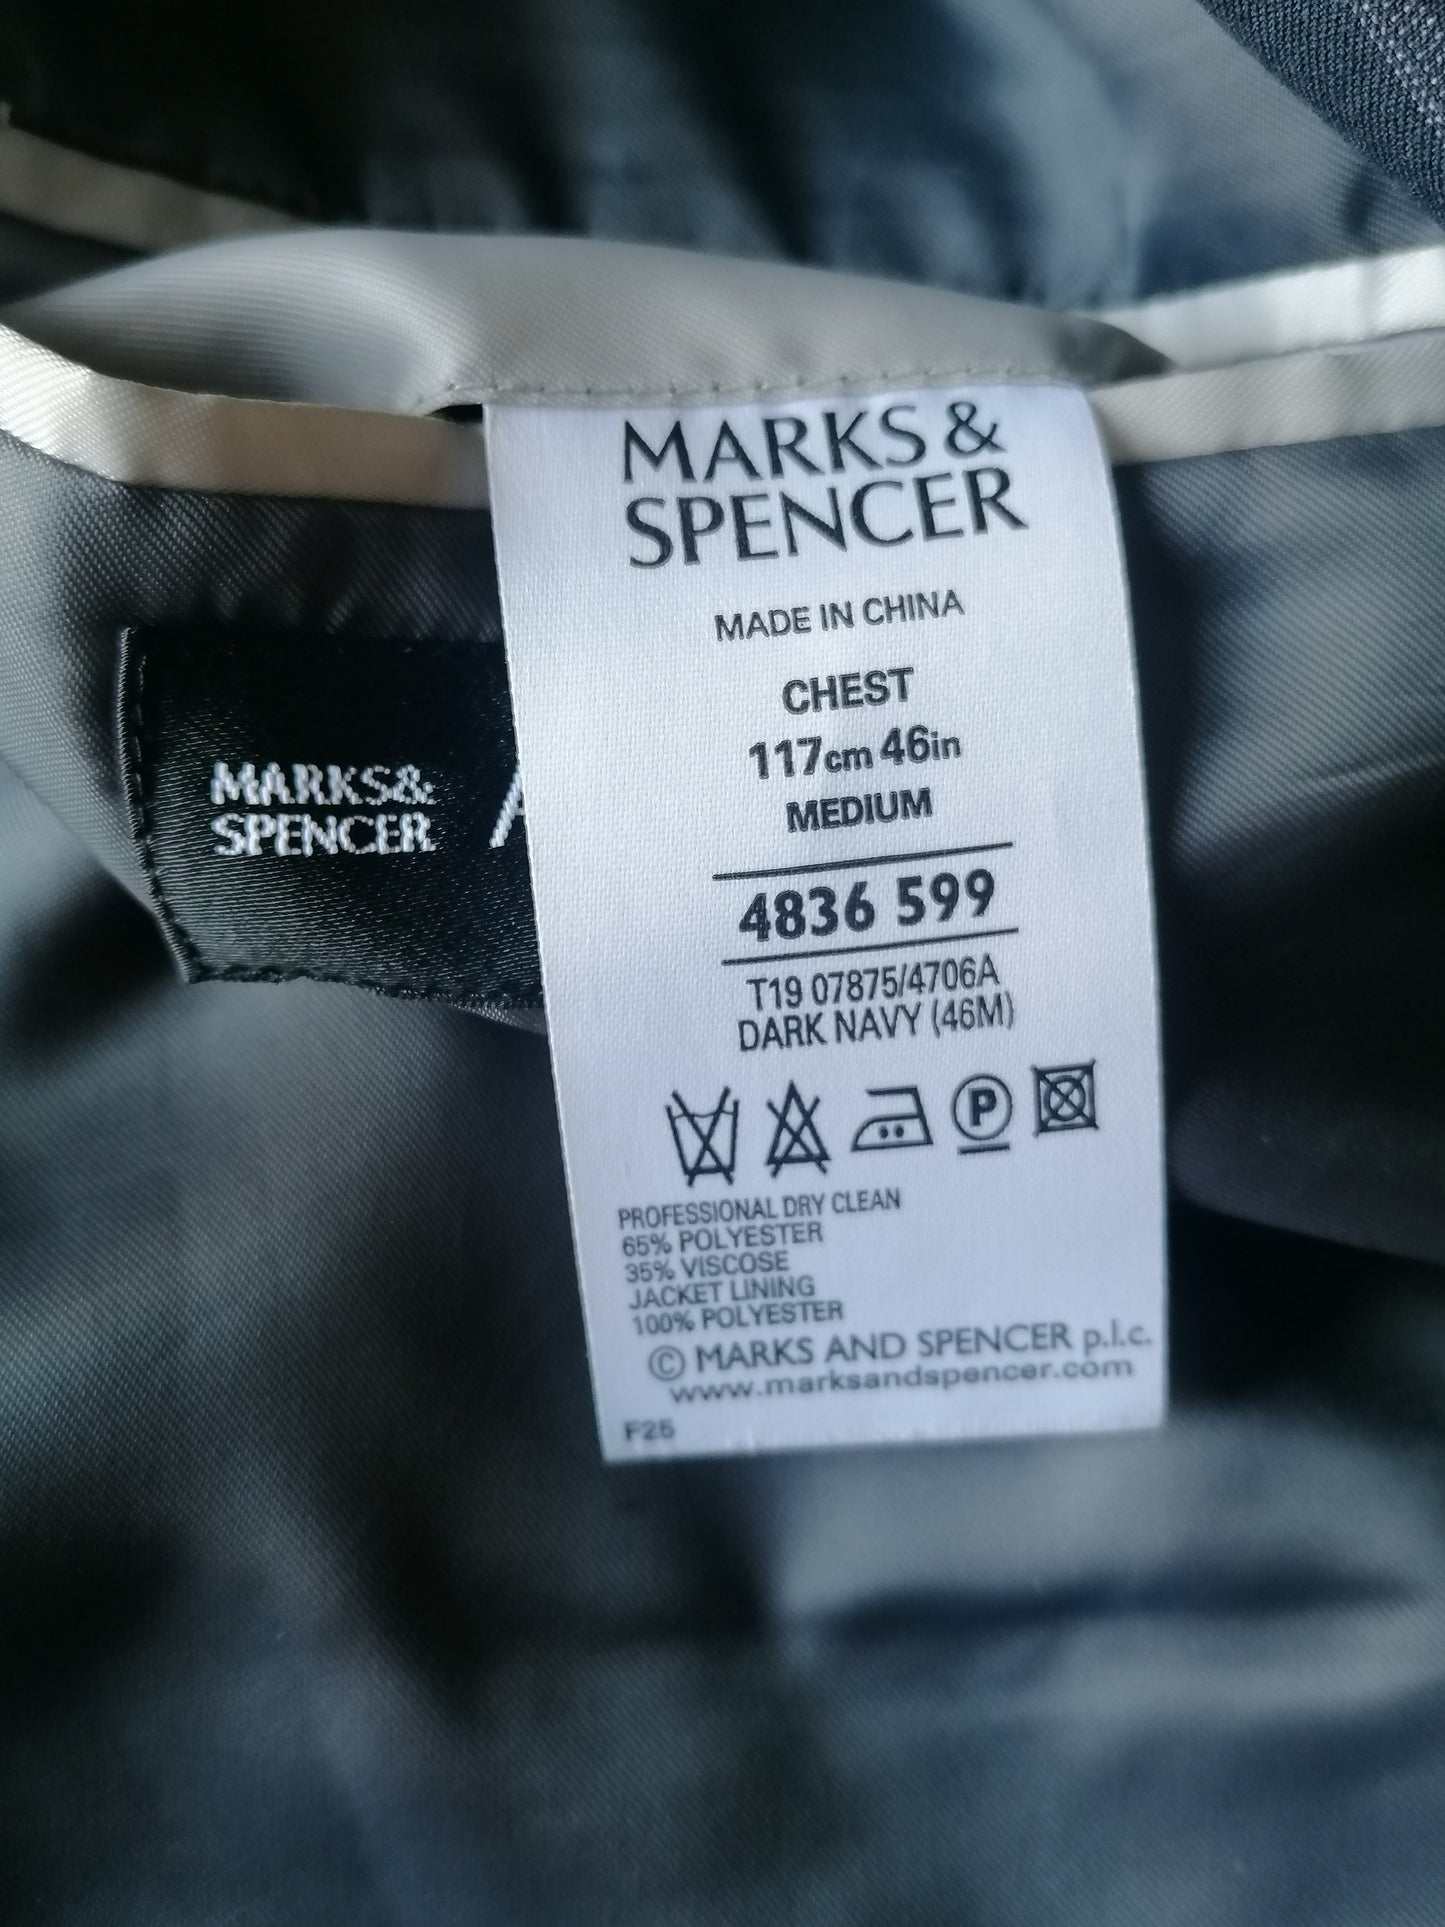 Giacca autografa (Marks & Spencer). A strisce in bianco e nero. Taglia 56 / XL.